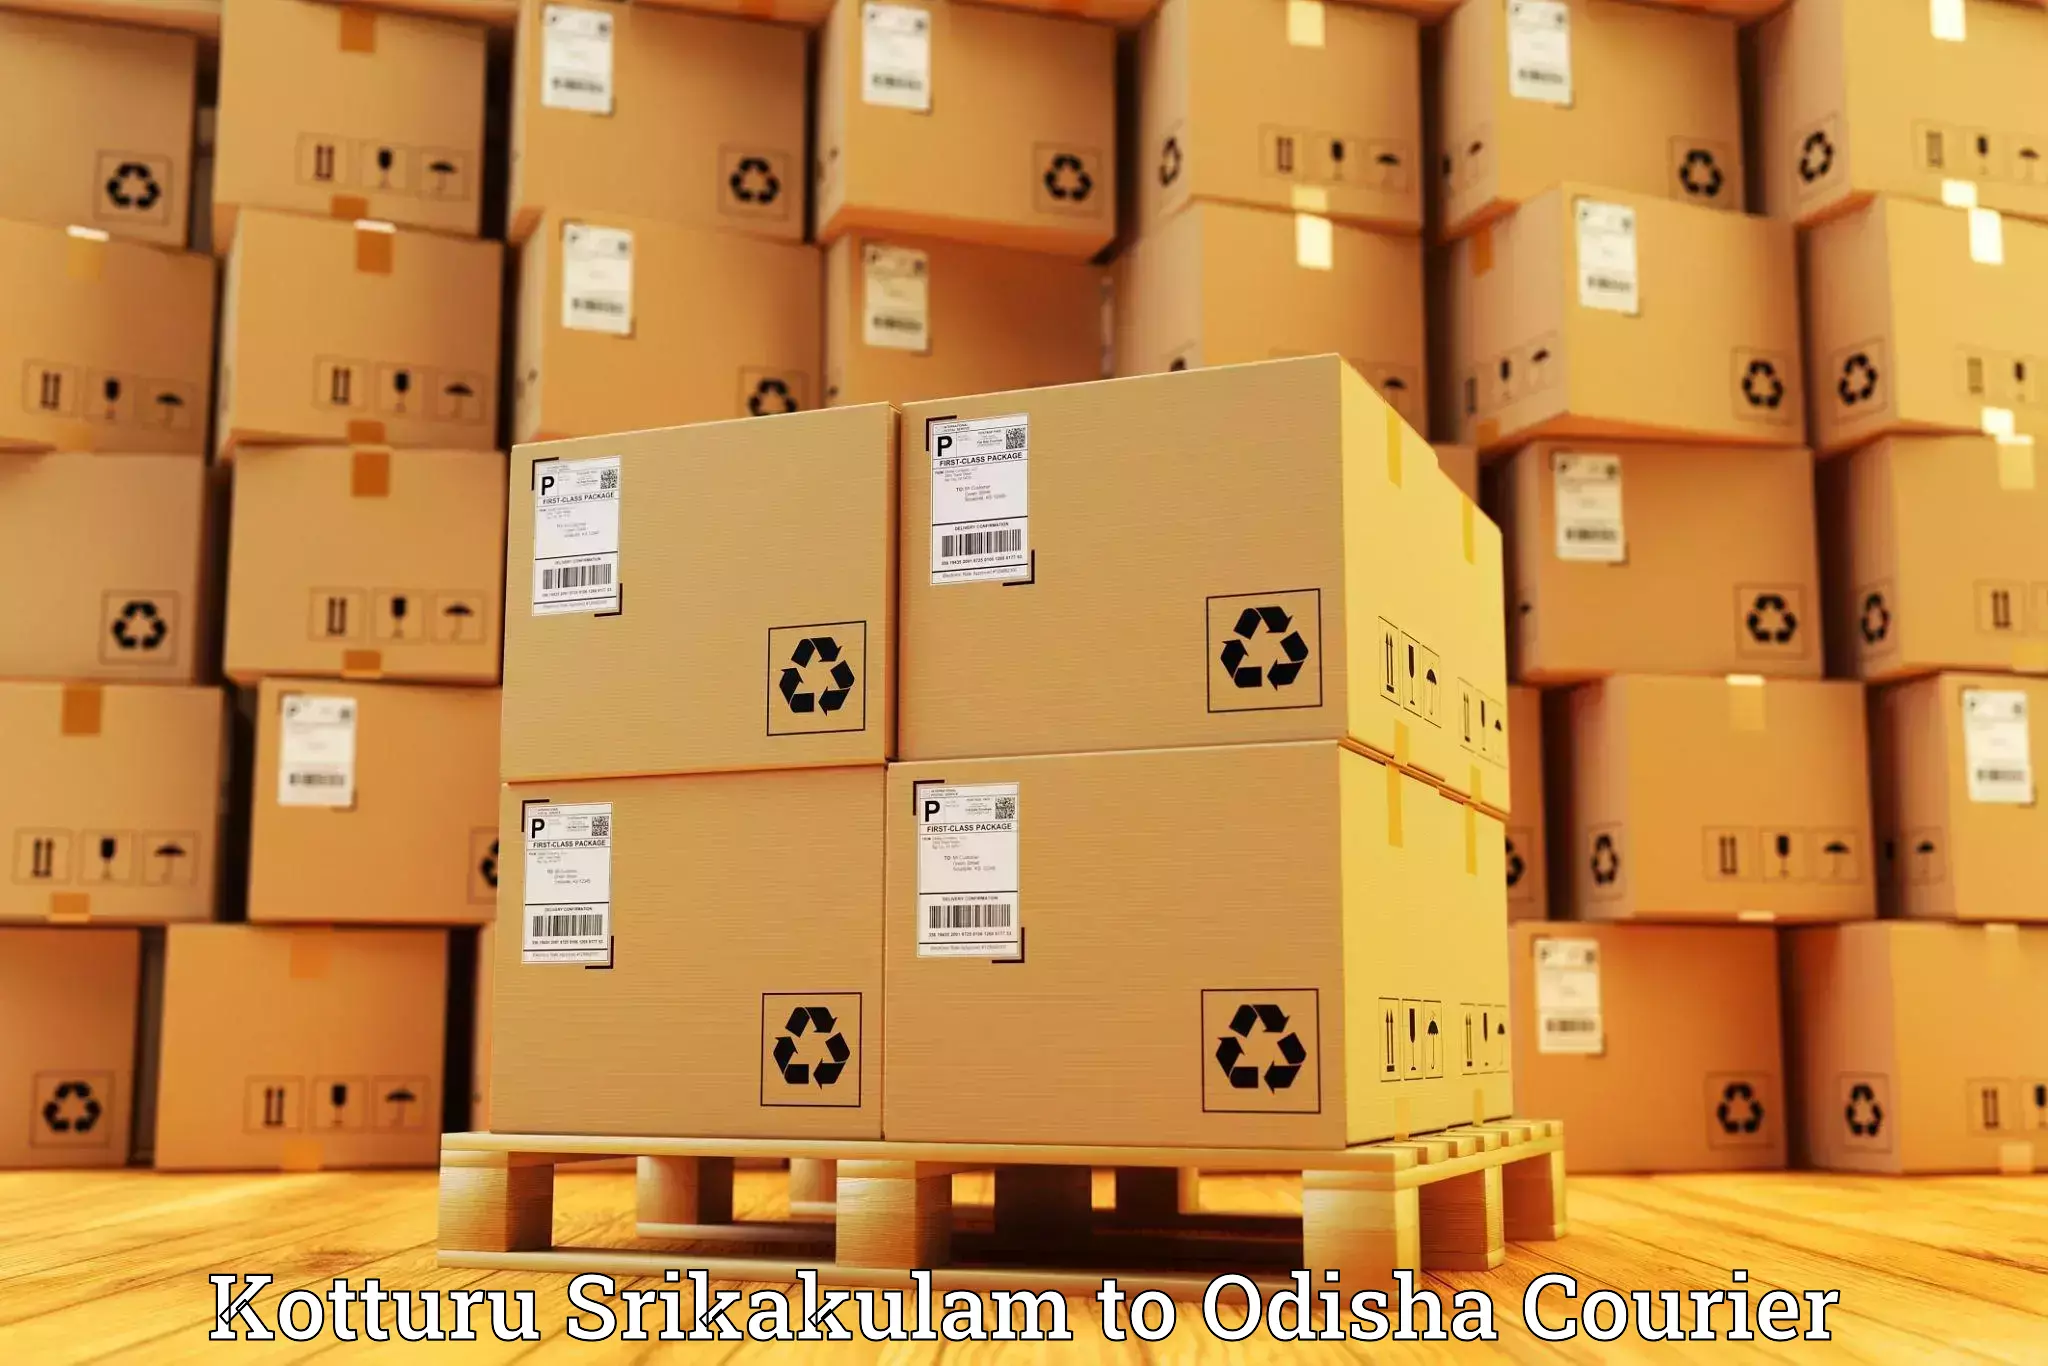 Courier service partnerships Kotturu Srikakulam to Asika